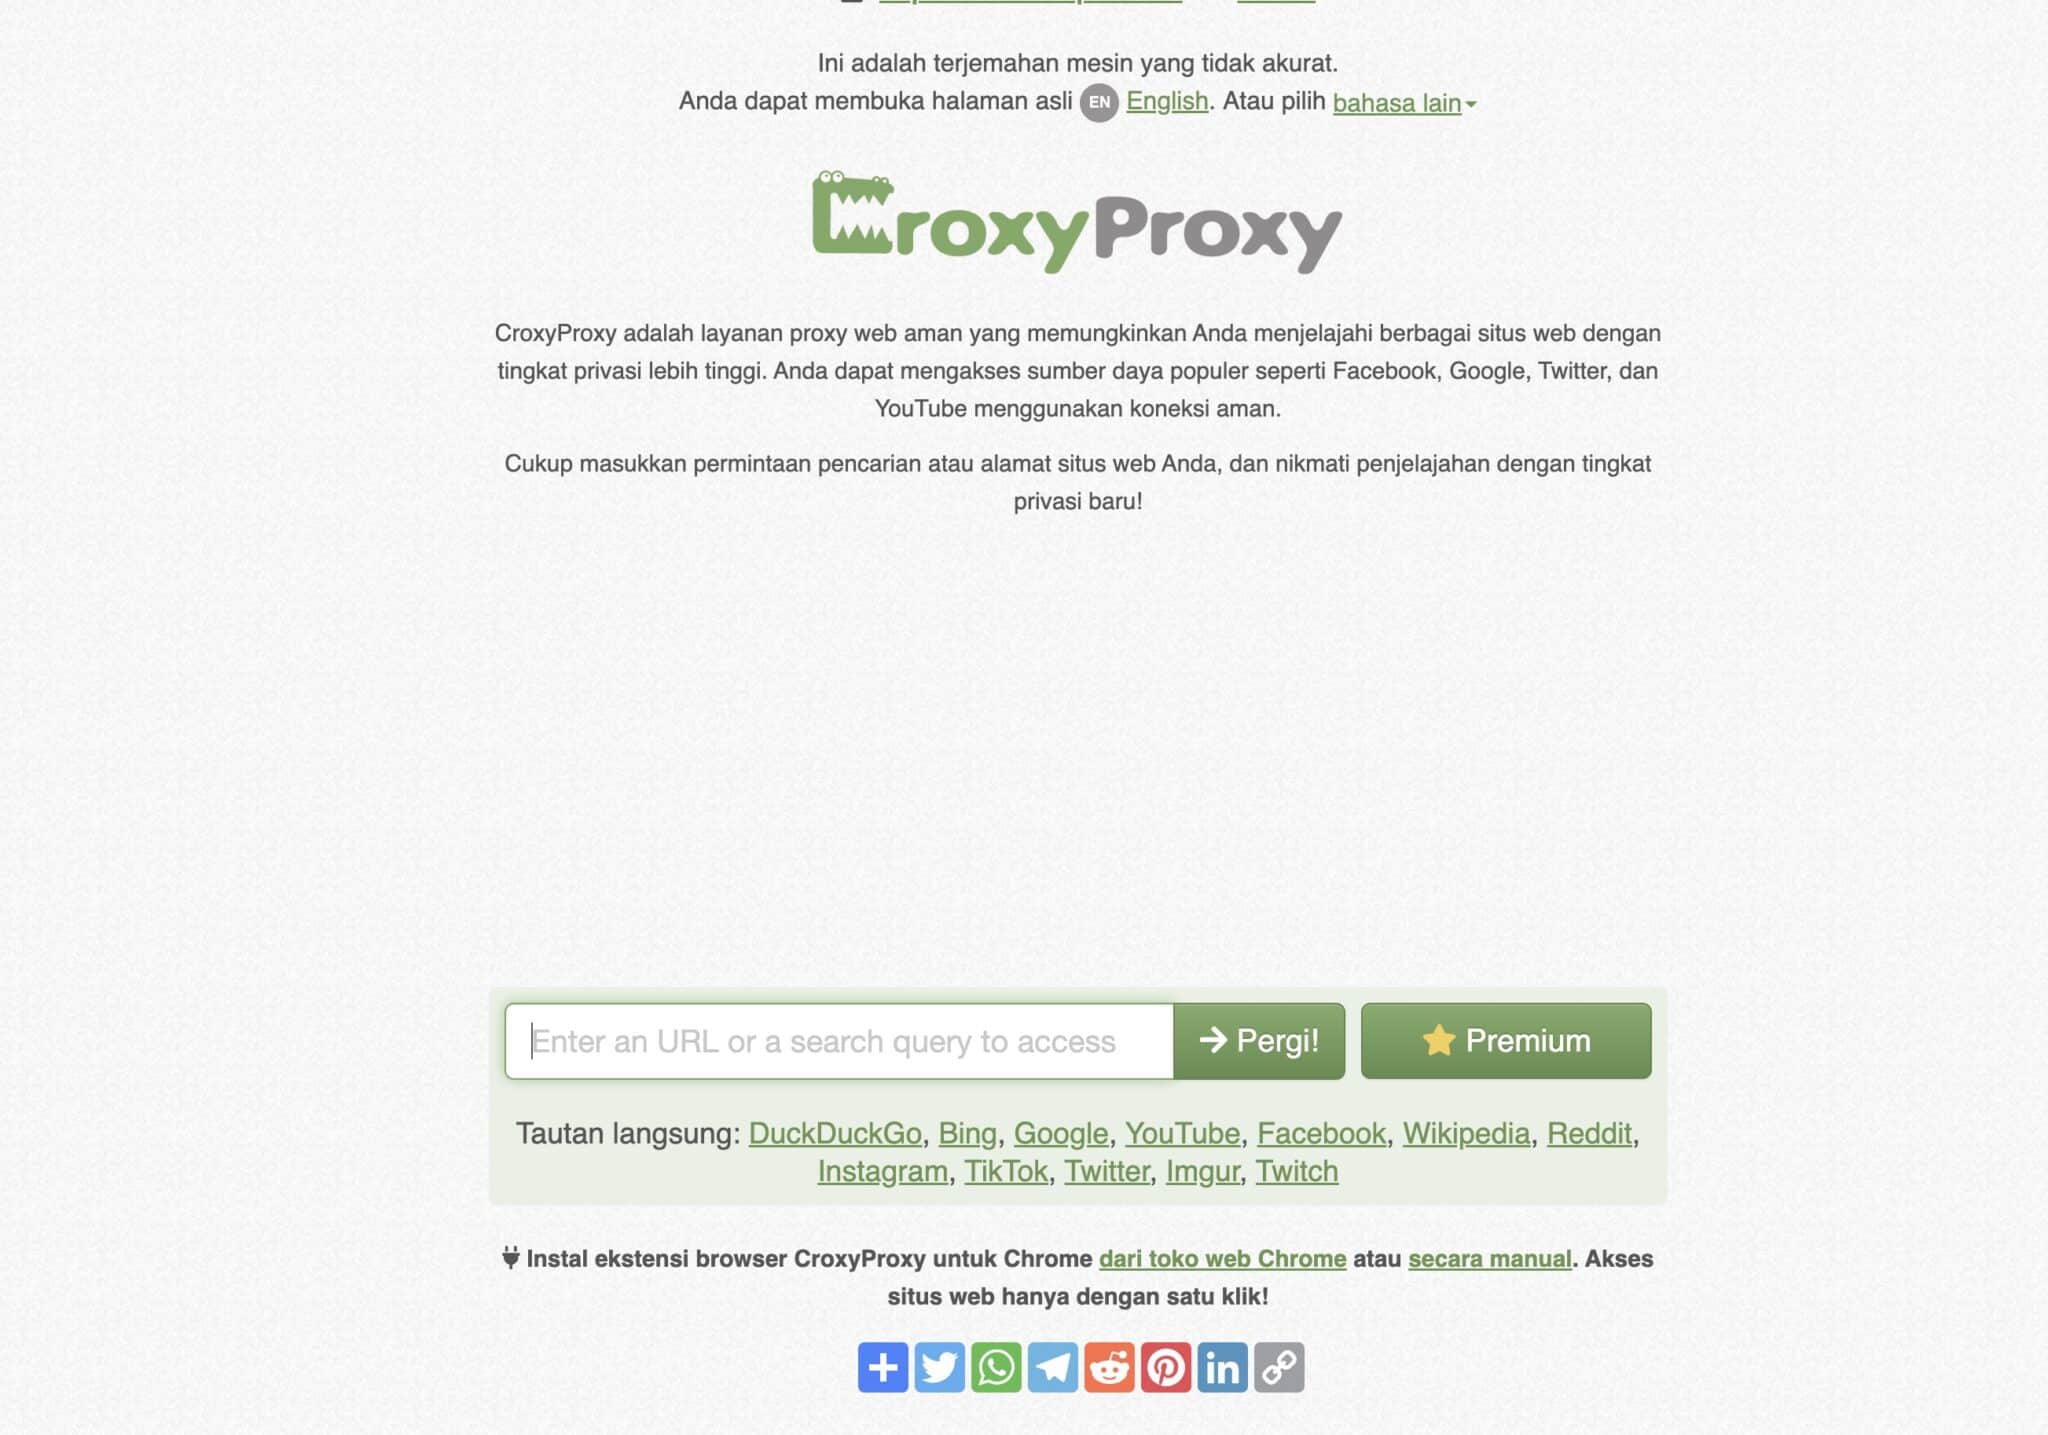 CroxyProxy کی بنیادی خصوصیات: CroxyProxy کے ساتھ انٹرنیٹ کی طاقت کو غیر مقفل کریں۔